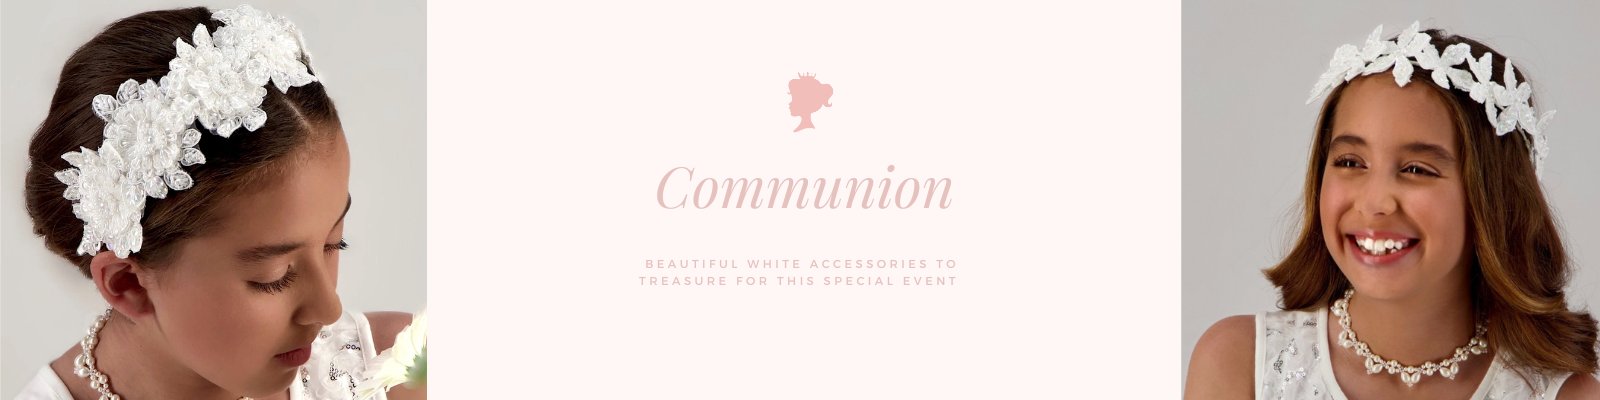 Baby Girl White hair accessories | communion